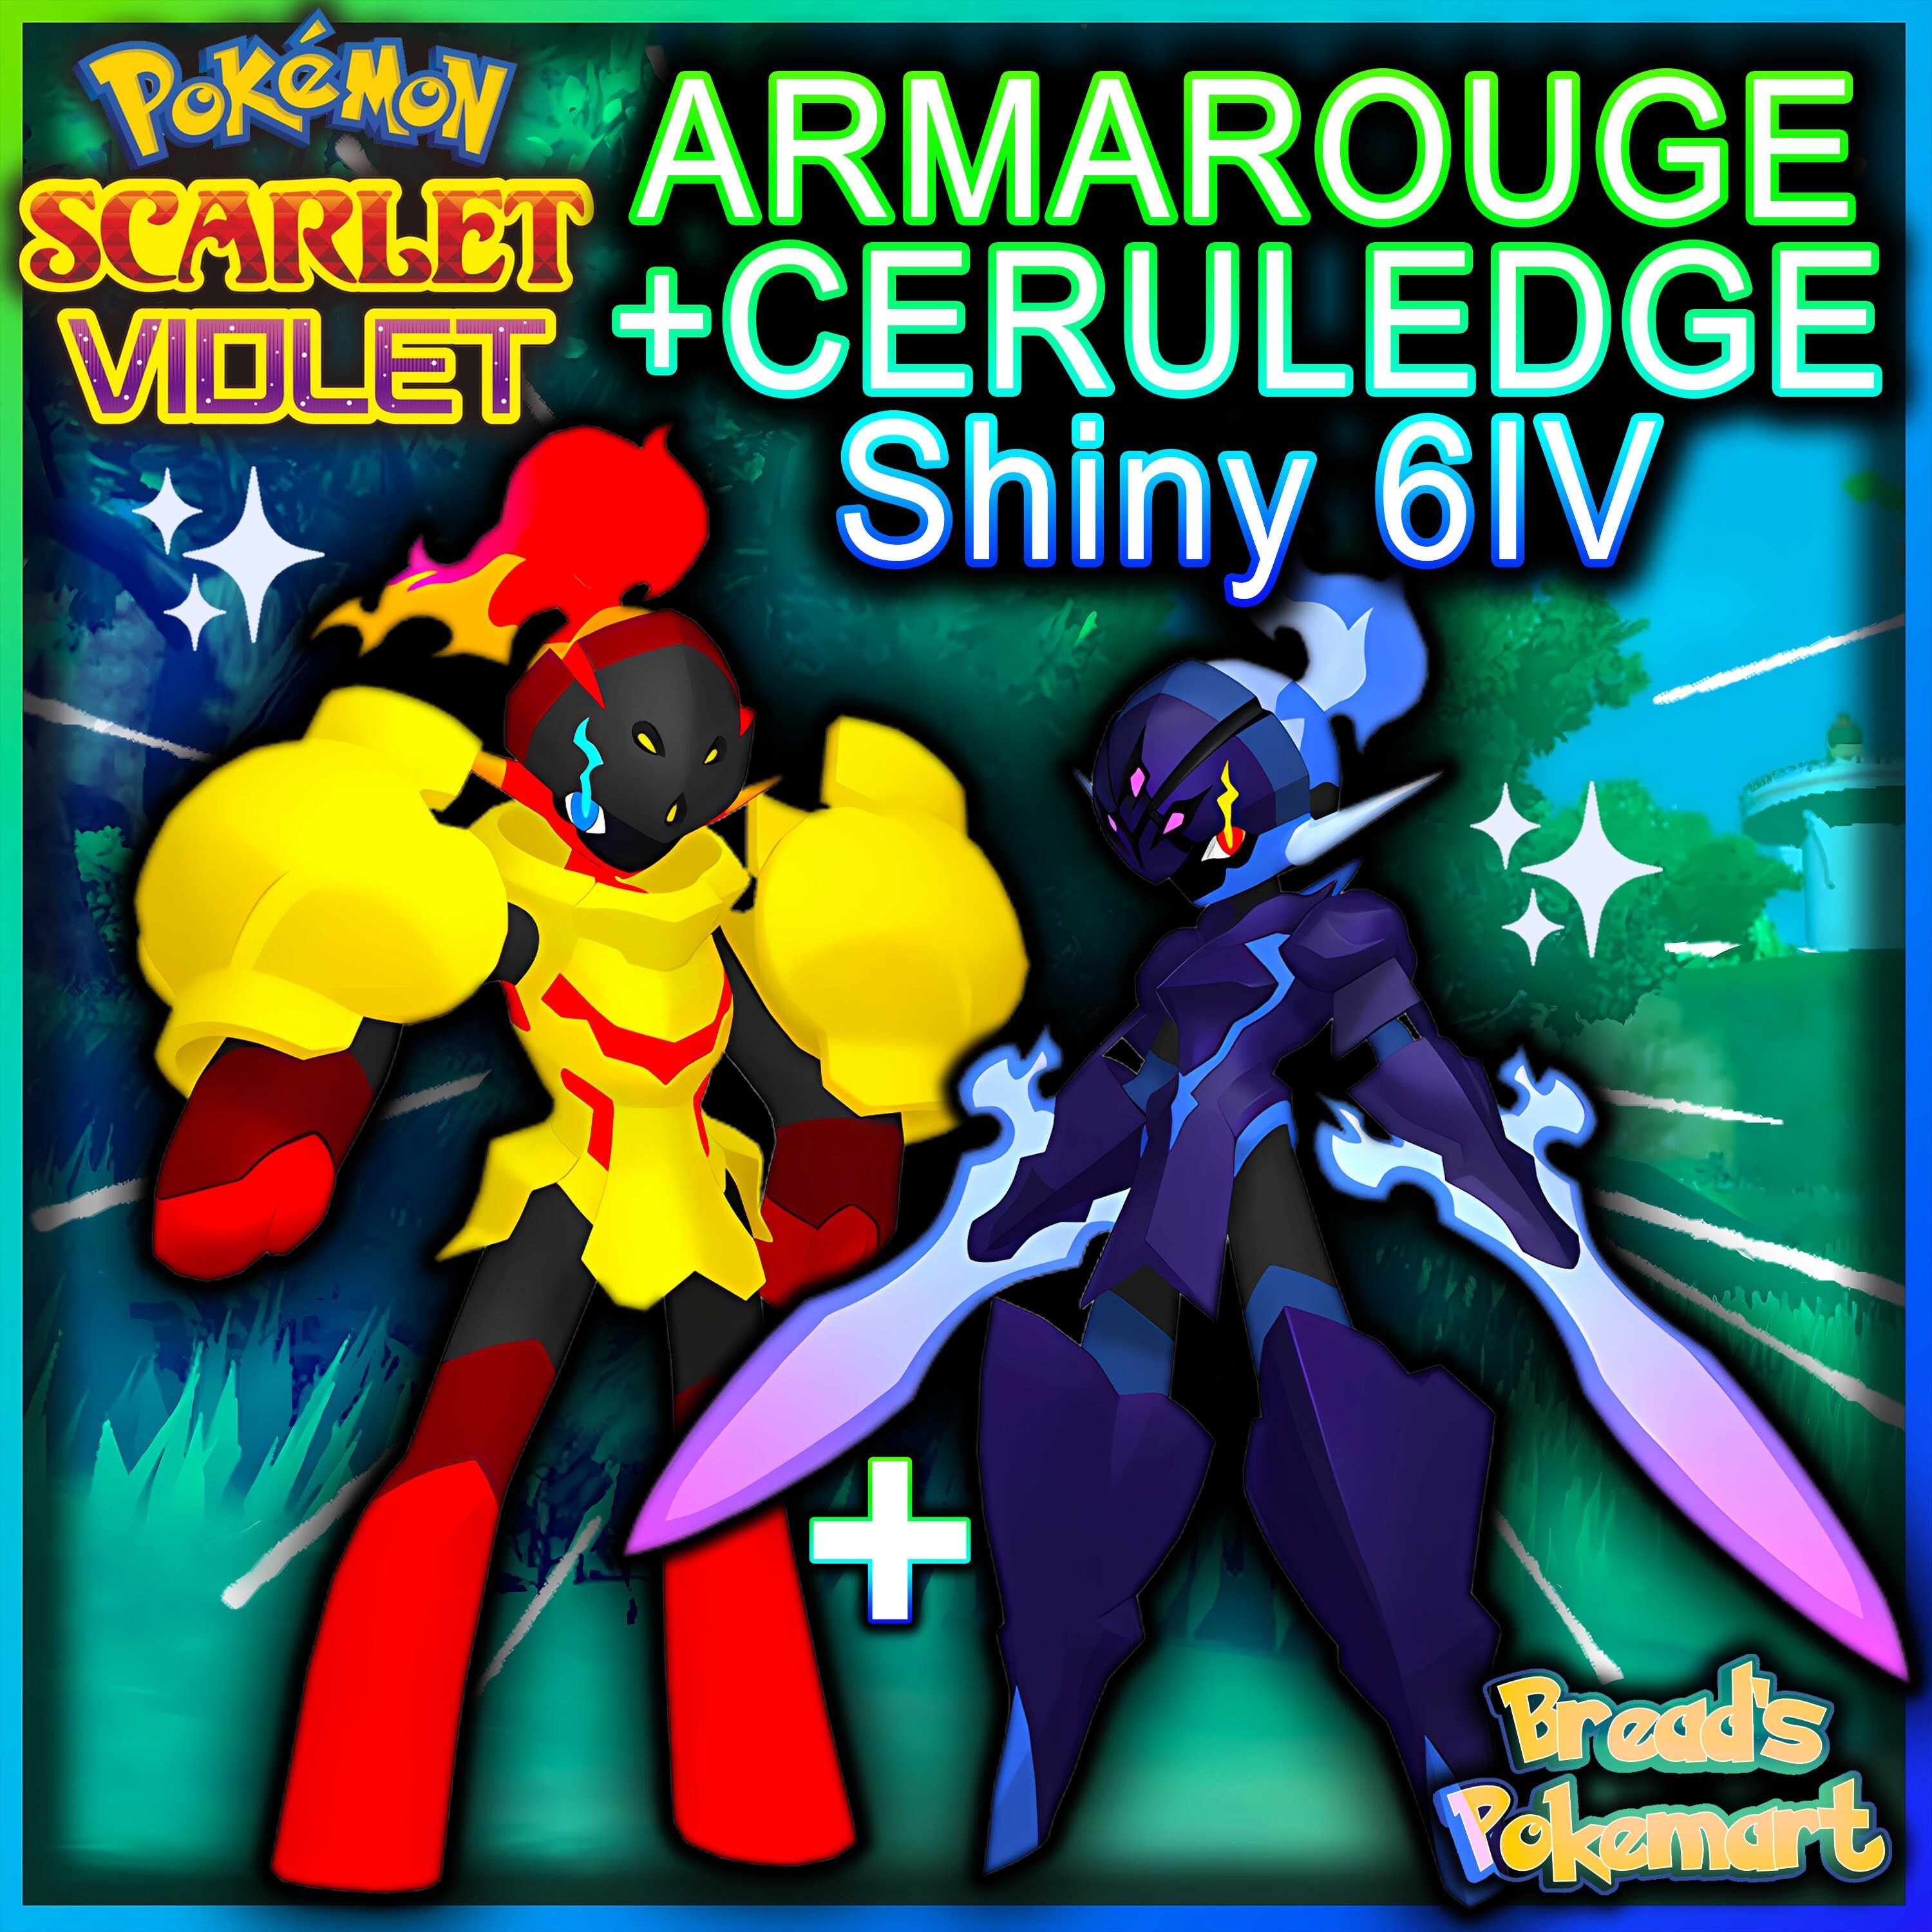 KINGAMBIT Shiny 6IV / Pokemon Scarlet and Violet / (Instant Download) 